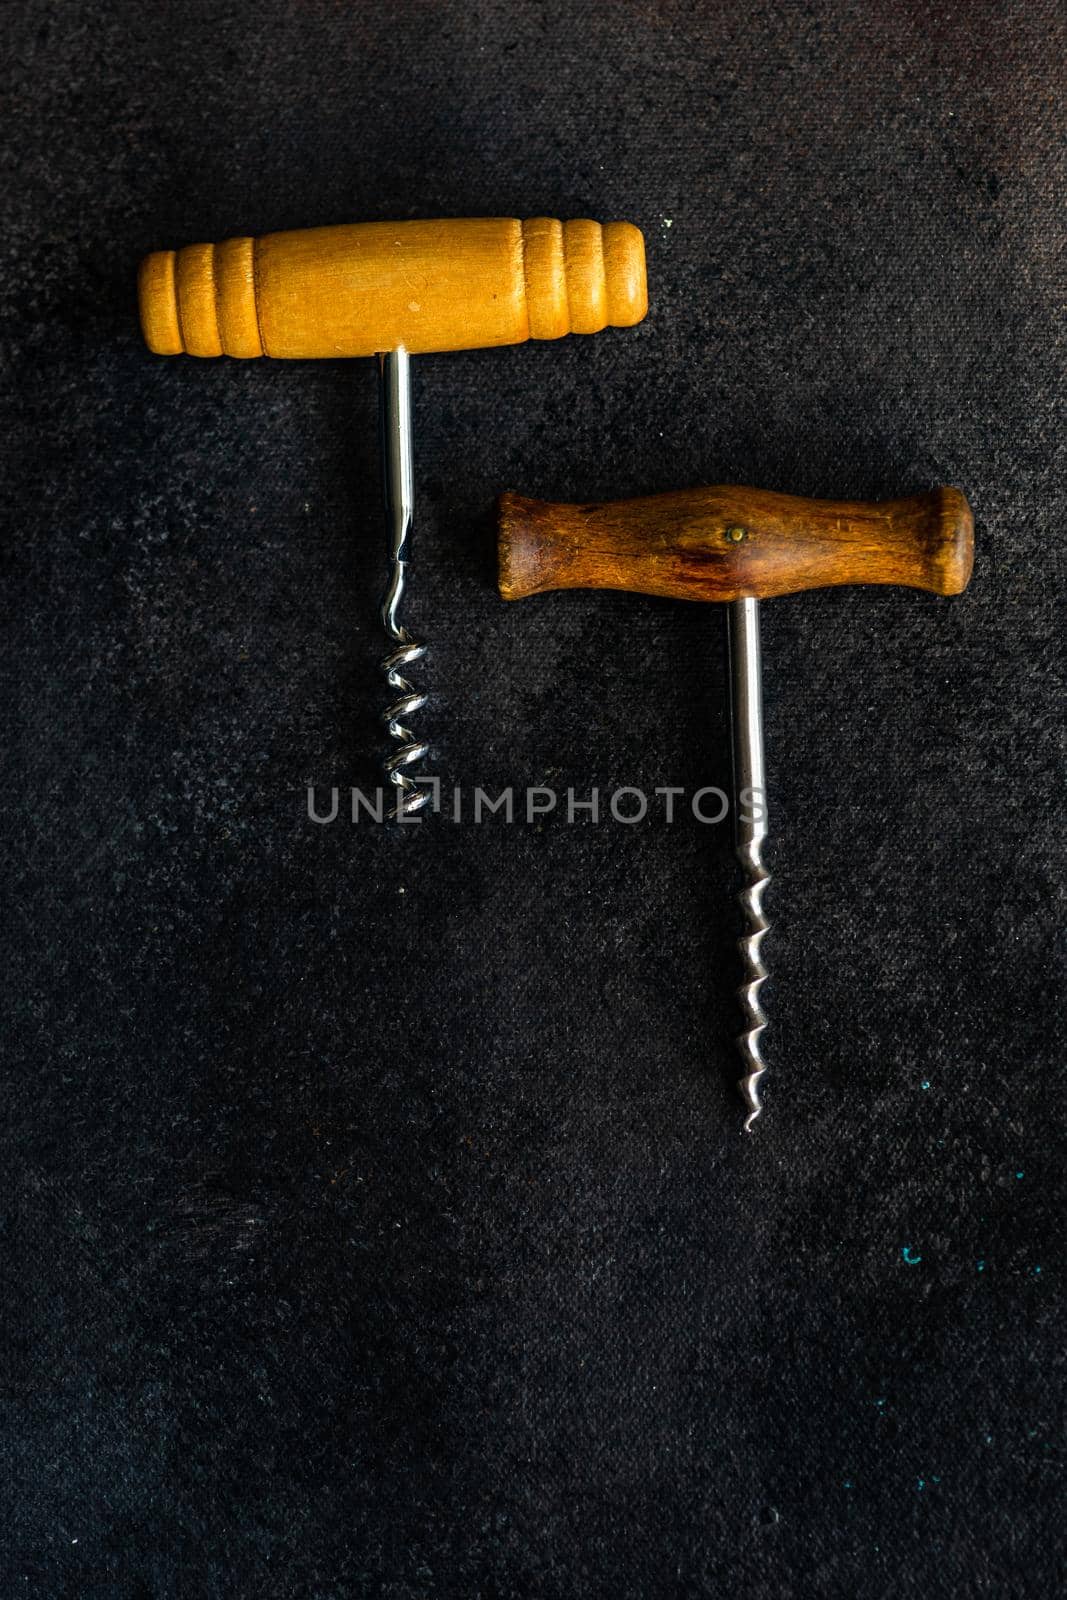 Vintage corkscrew on textured  rustic background